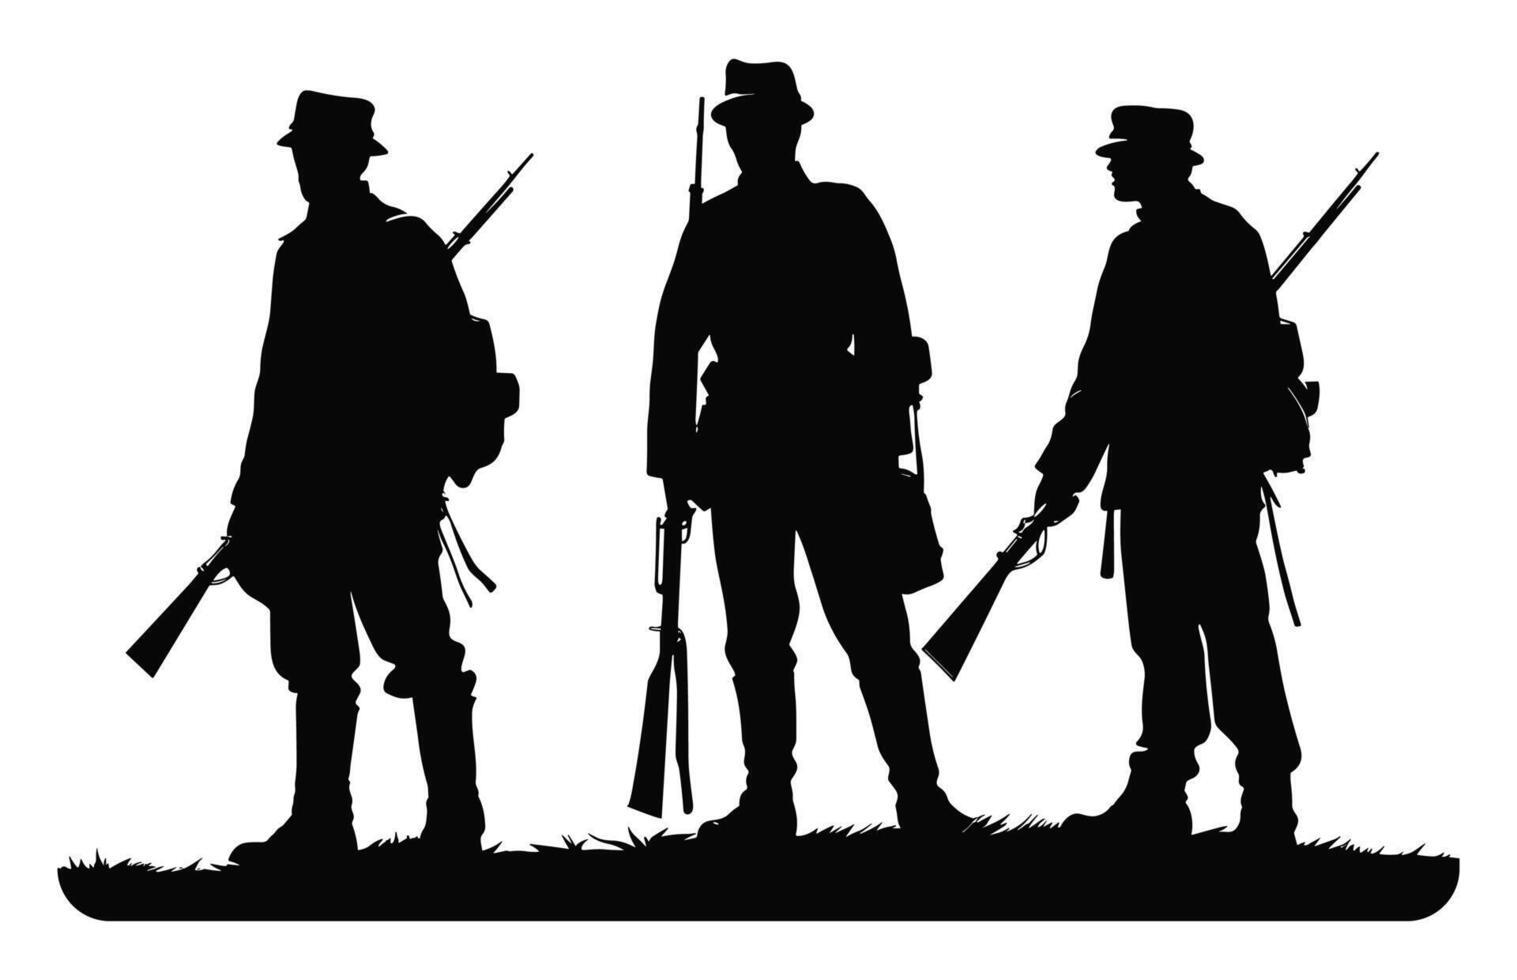 American Civil War soldiers Silhouette vector, Civil War soldier black silhouettes vector